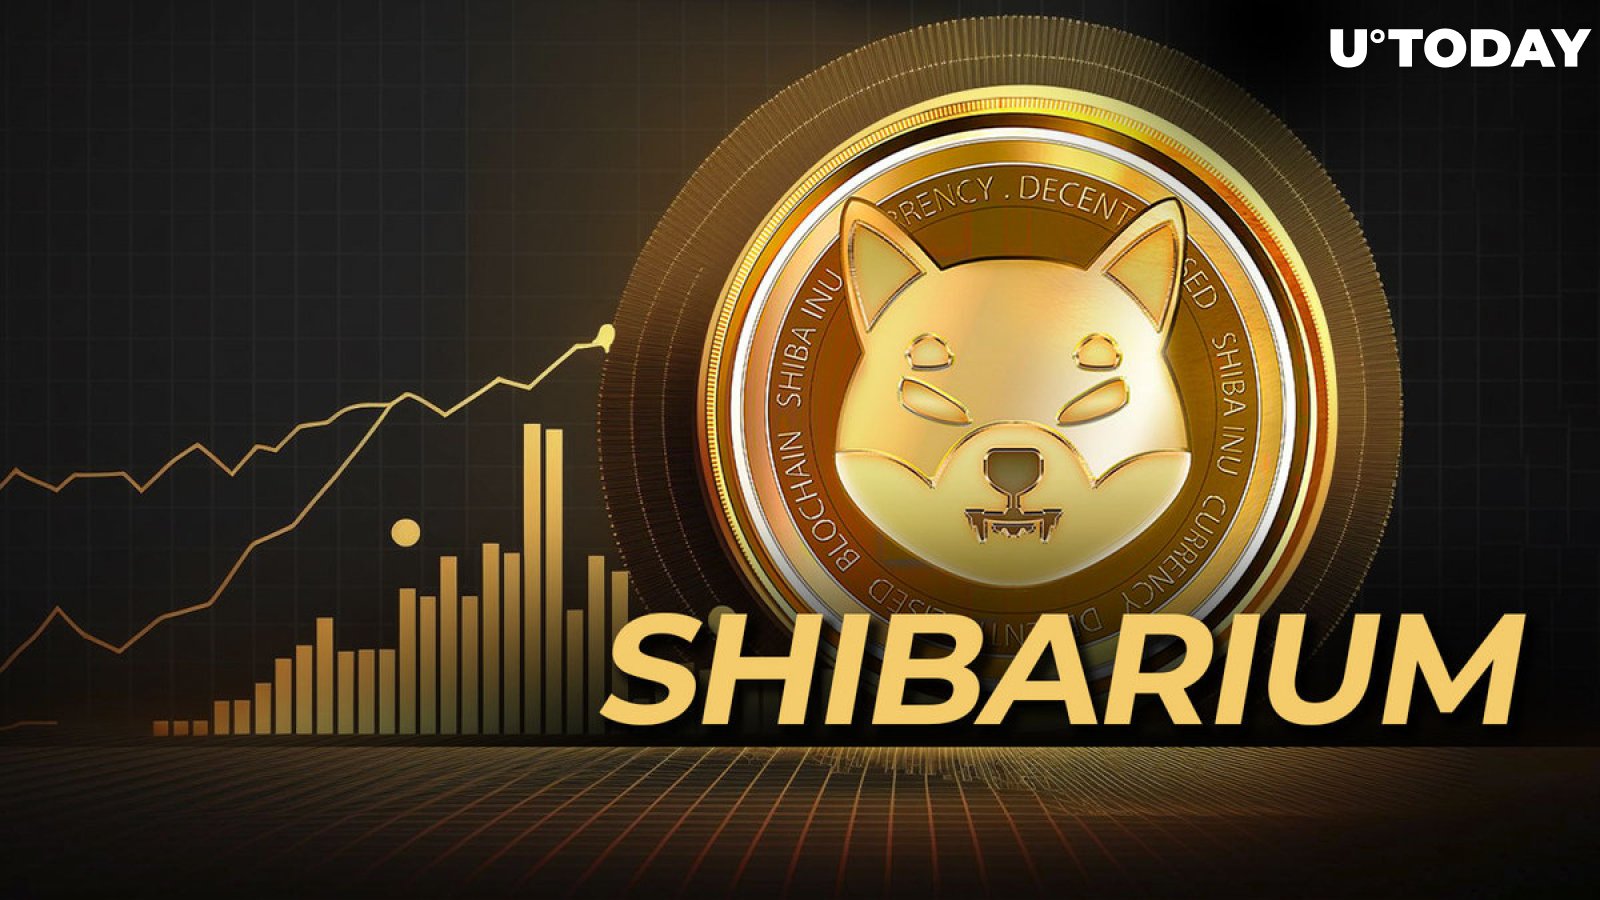 Shibarium achieves a new major milestone: details